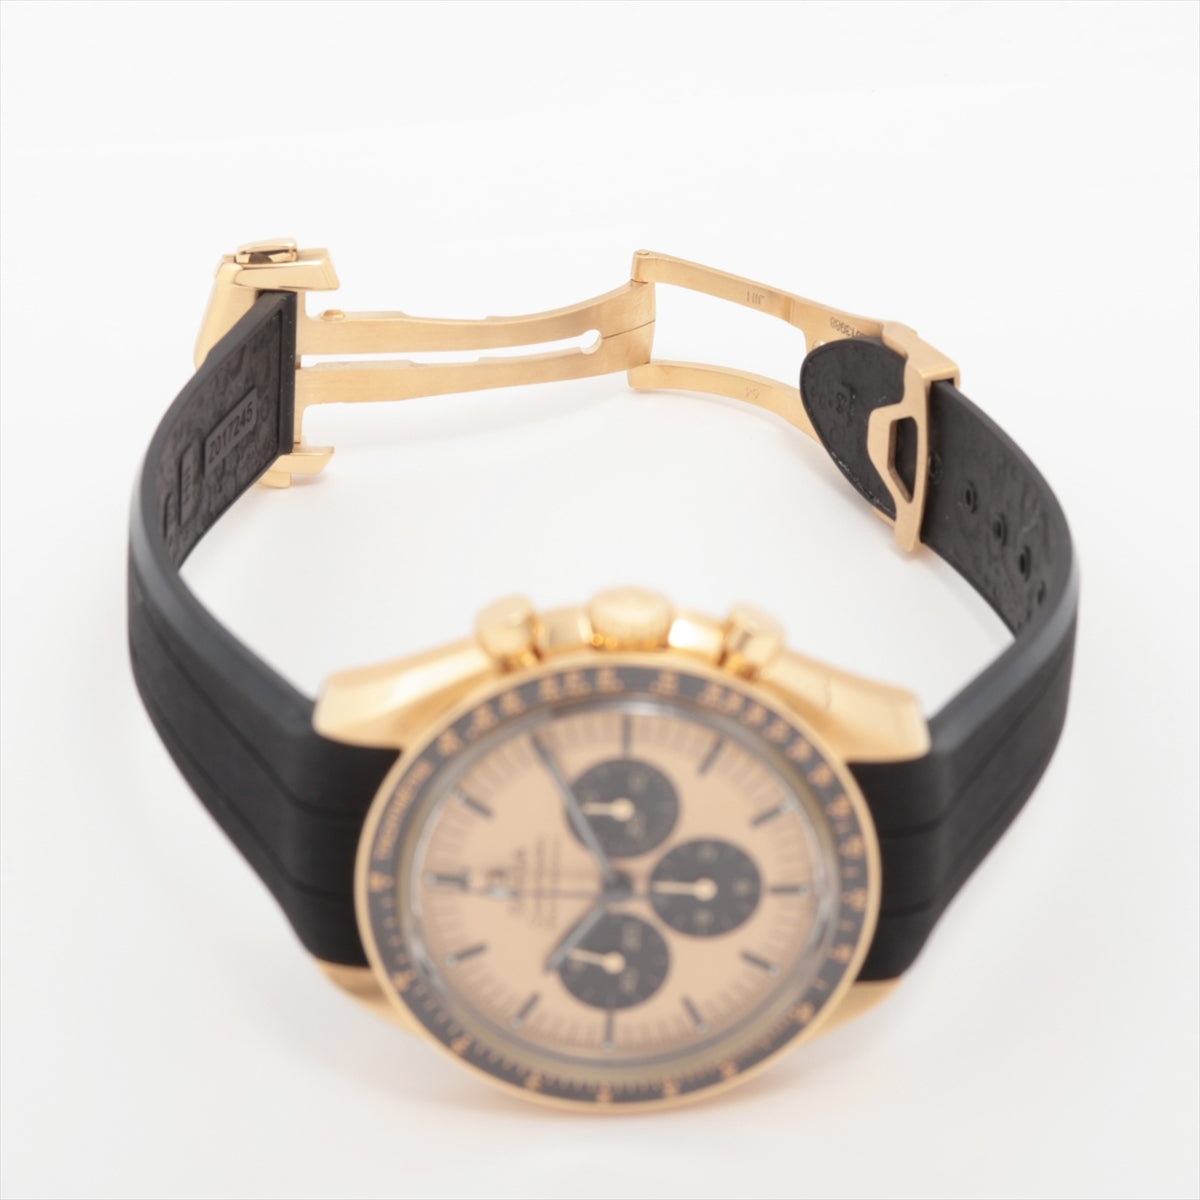 Omega Speedmaster Moonwatch Professional Chronograph 310.62.42.50.99.001 YG & rubber Stem-winder Gold dial